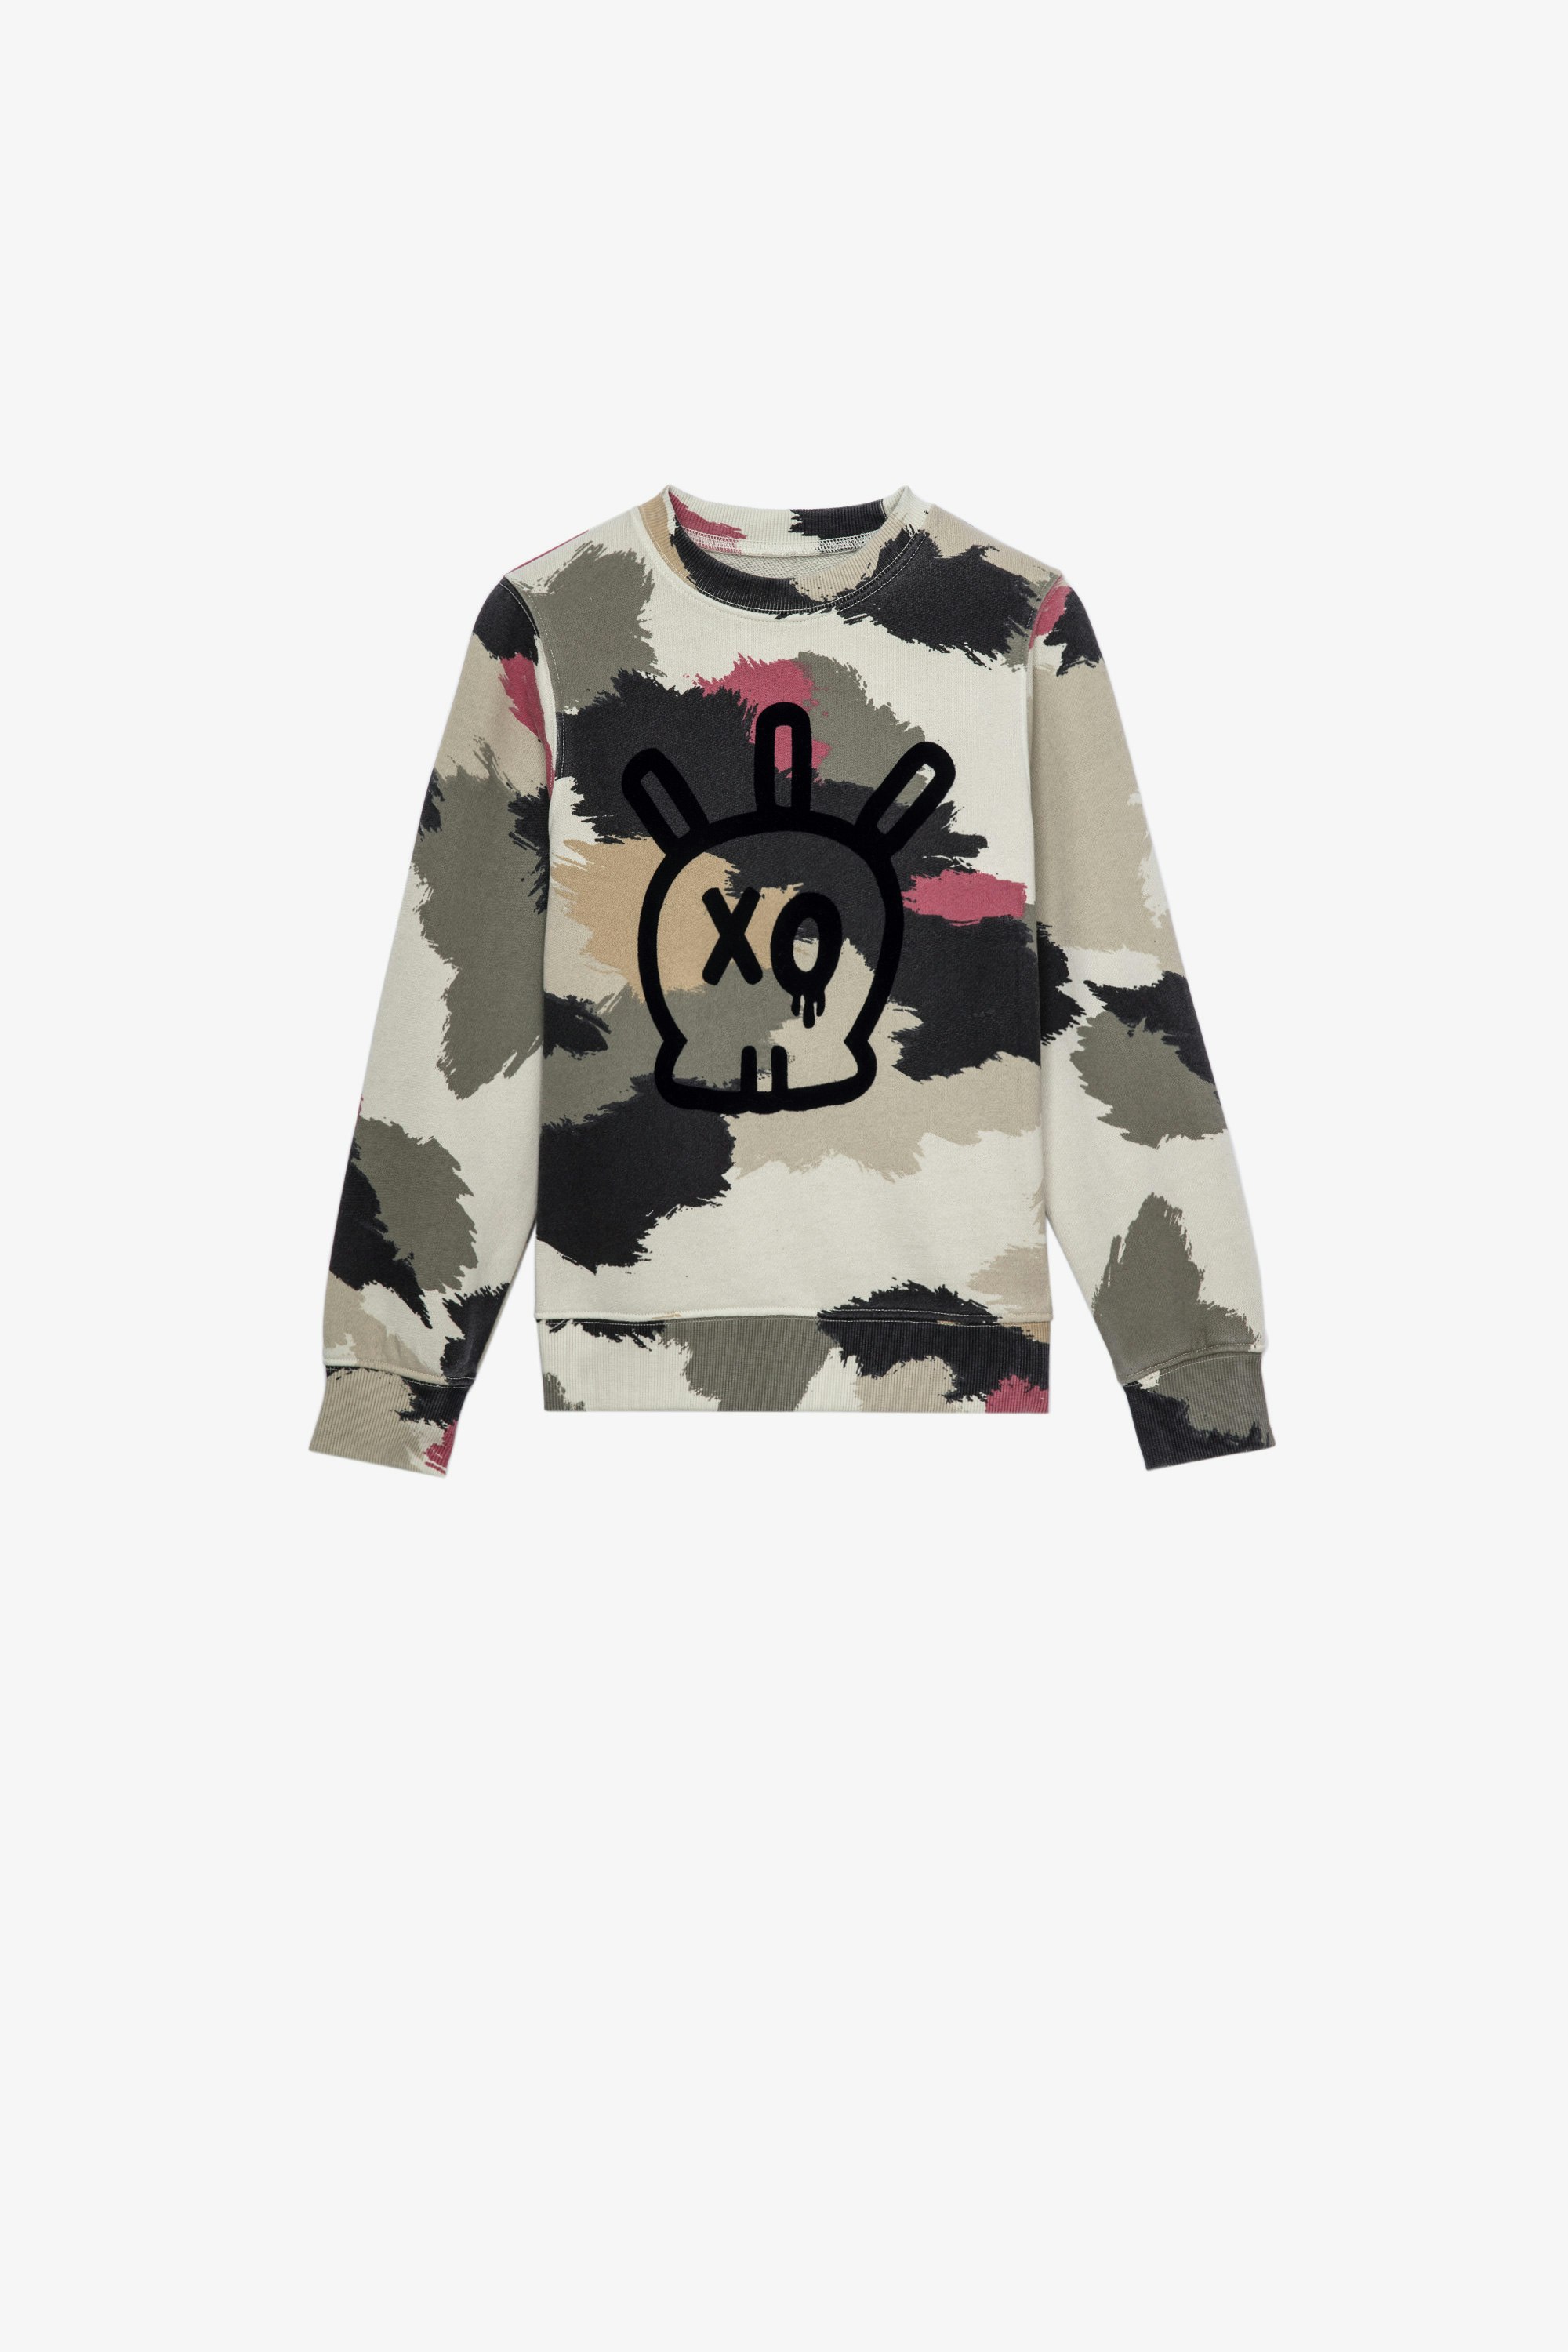 Simba Children’s スウェット Children’s multicoloured cotton sweatshirt with camouflage print and Jormi skull motif 